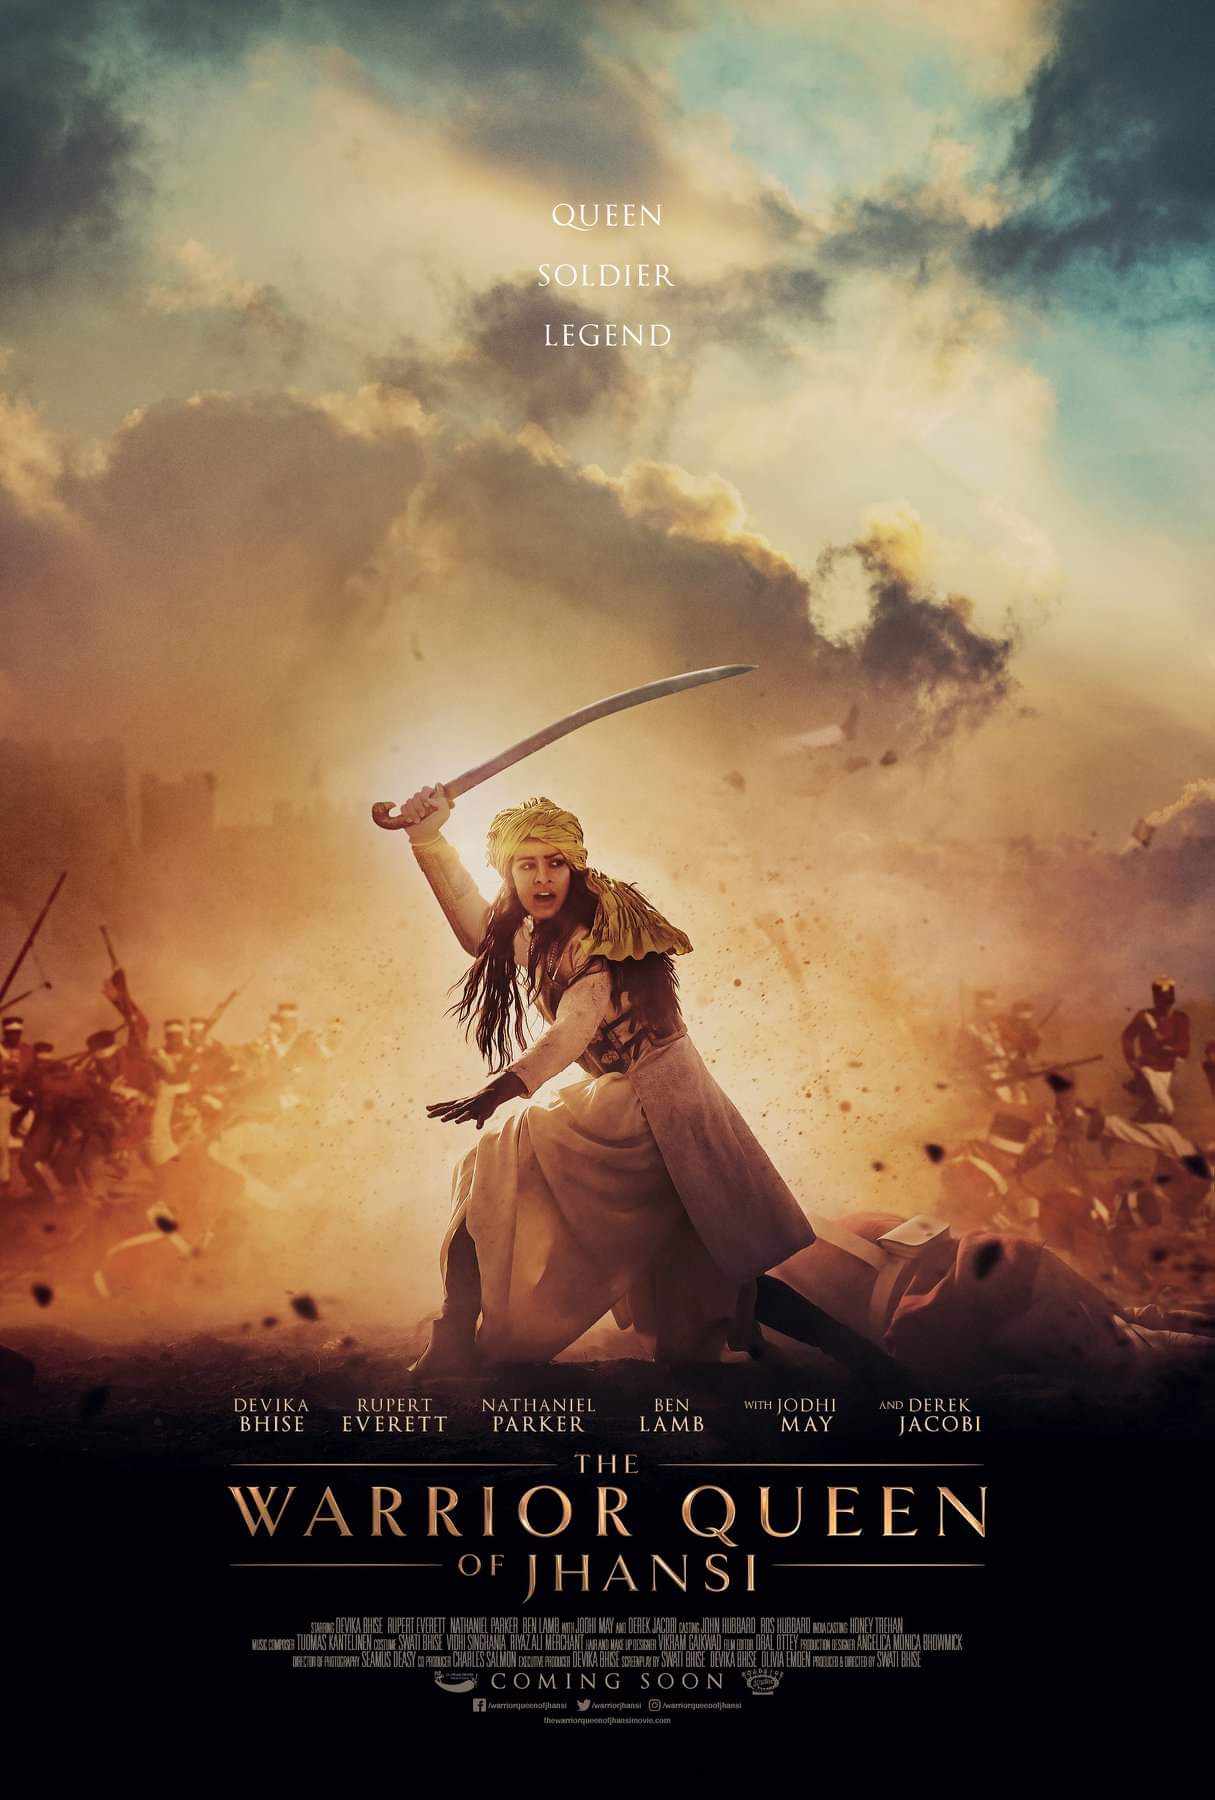 Nonton film The Warrior Queen of Jhansi layarkaca21 indoxx1 ganool online streaming terbaru